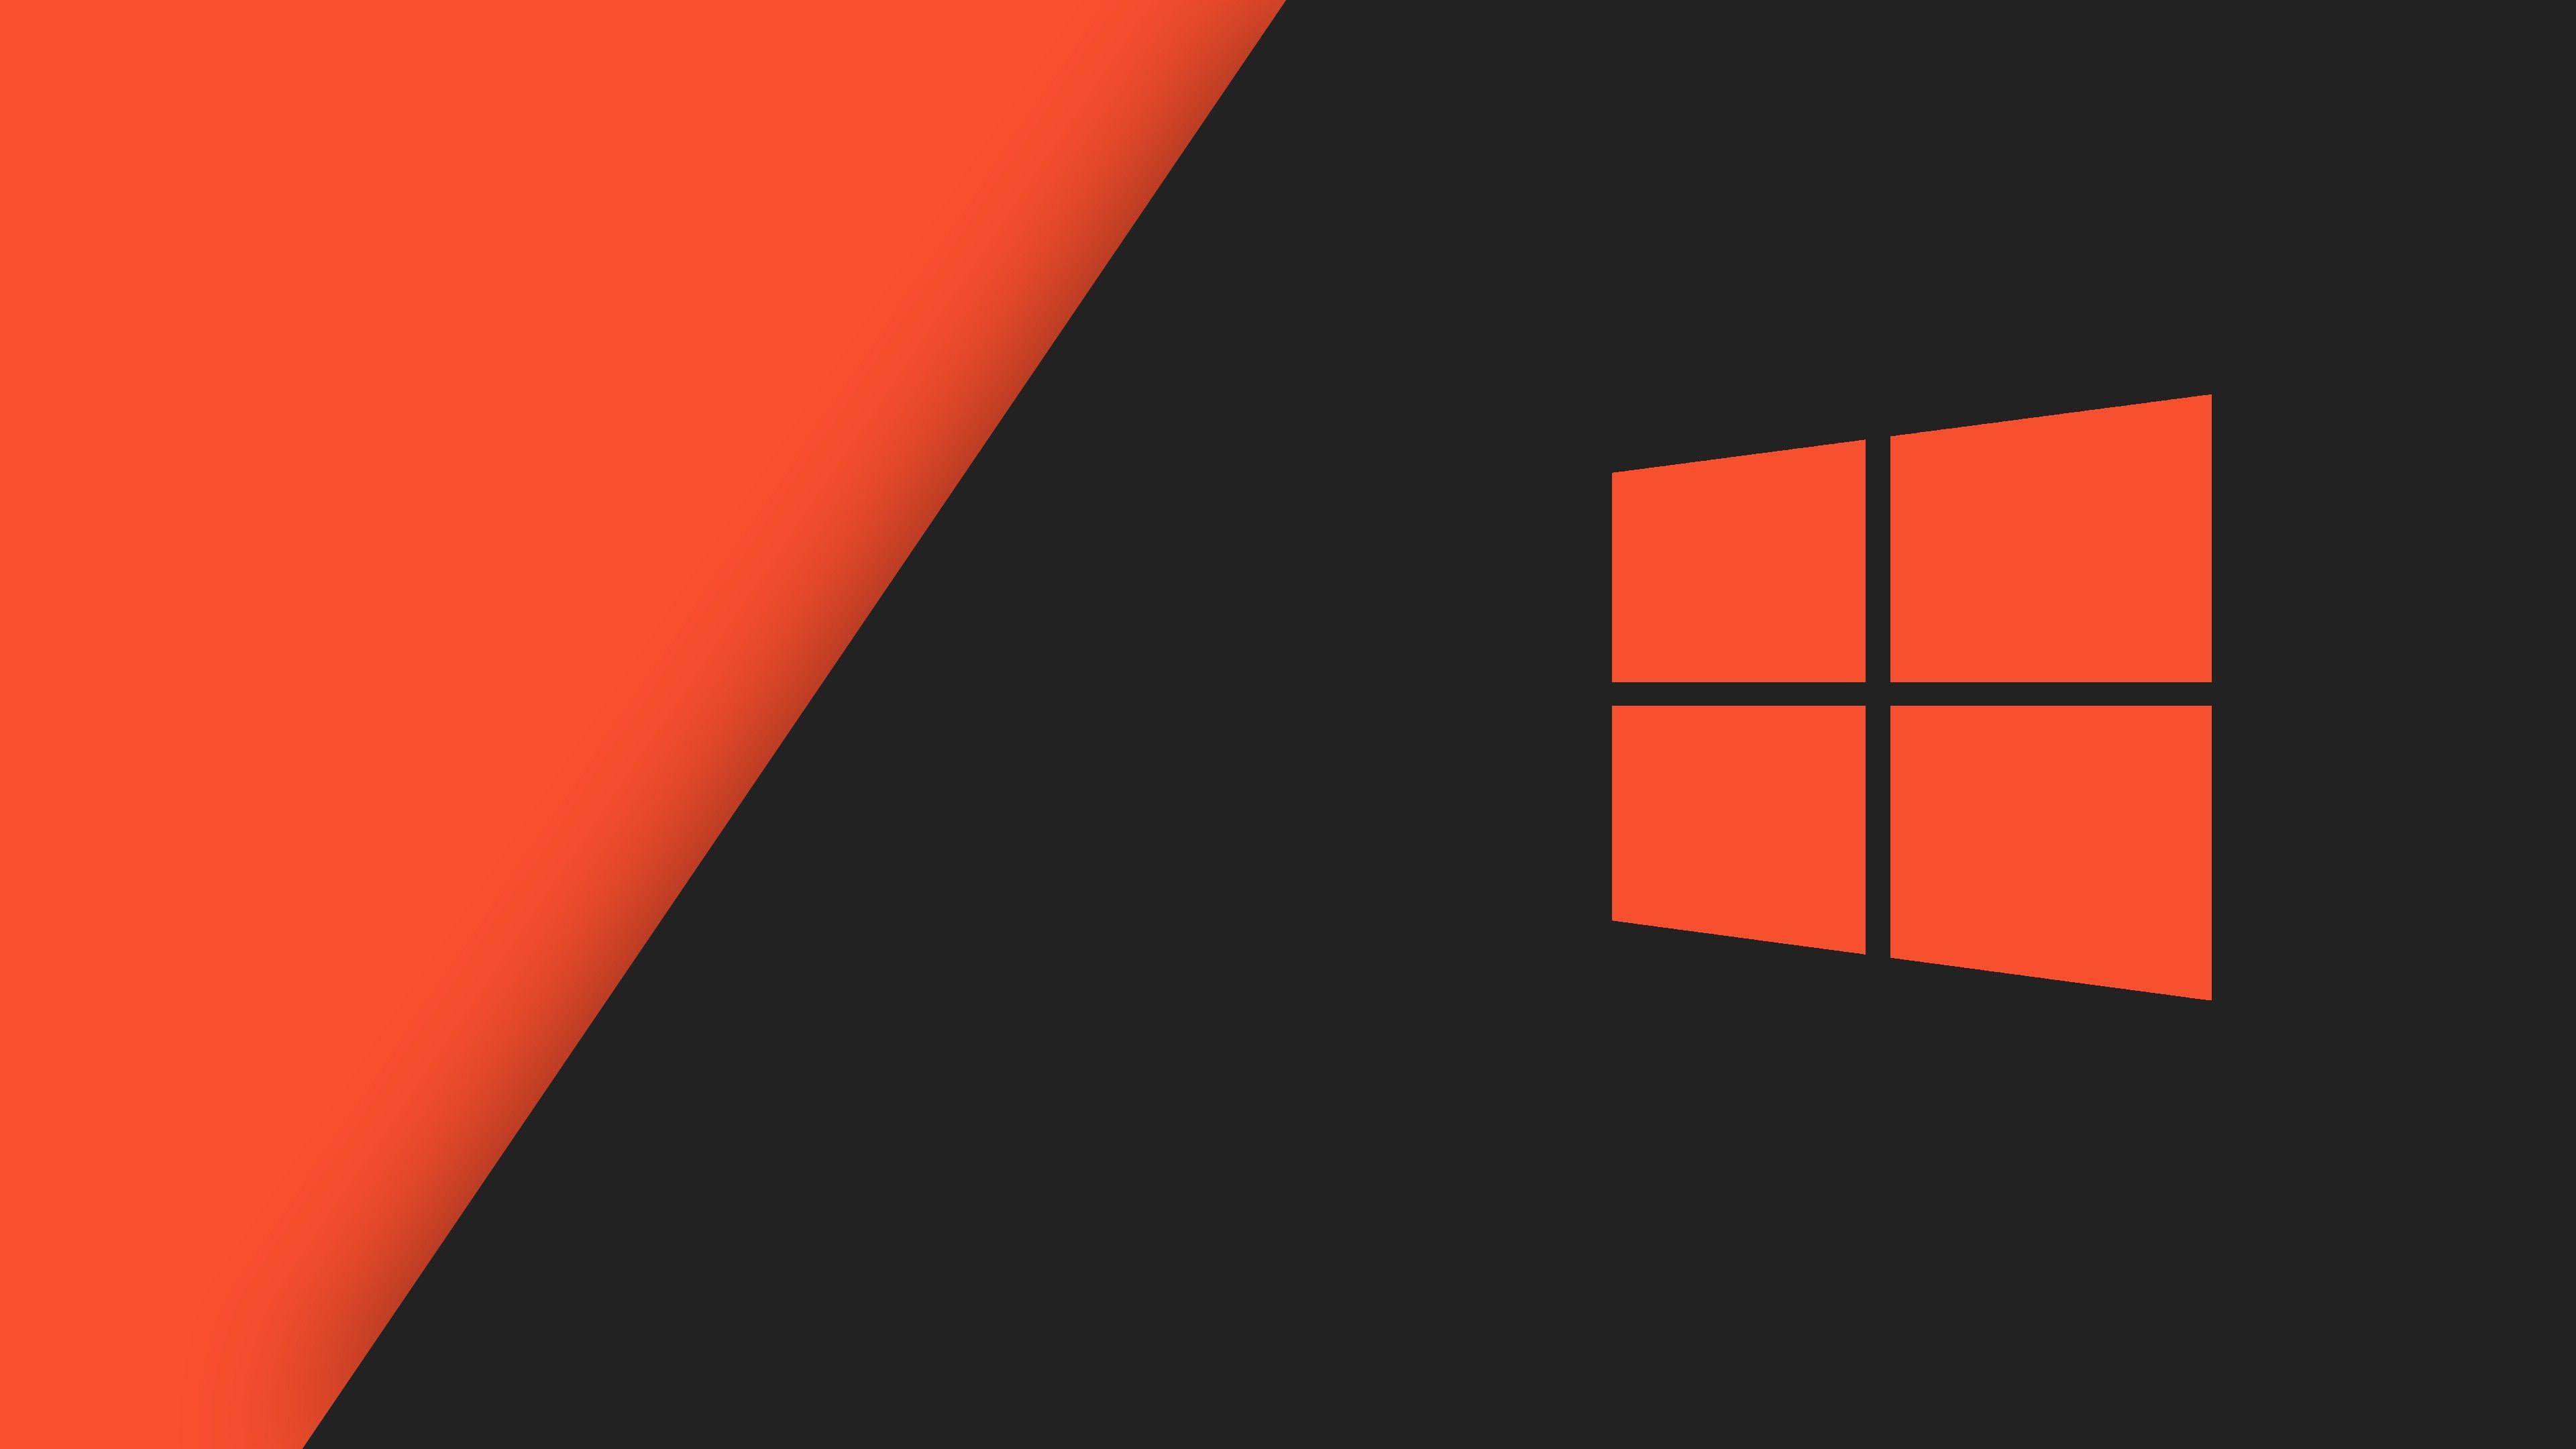 Red Windows Logo - Wallpaper : illustration, minimalism, red, text, logo, graphic ...